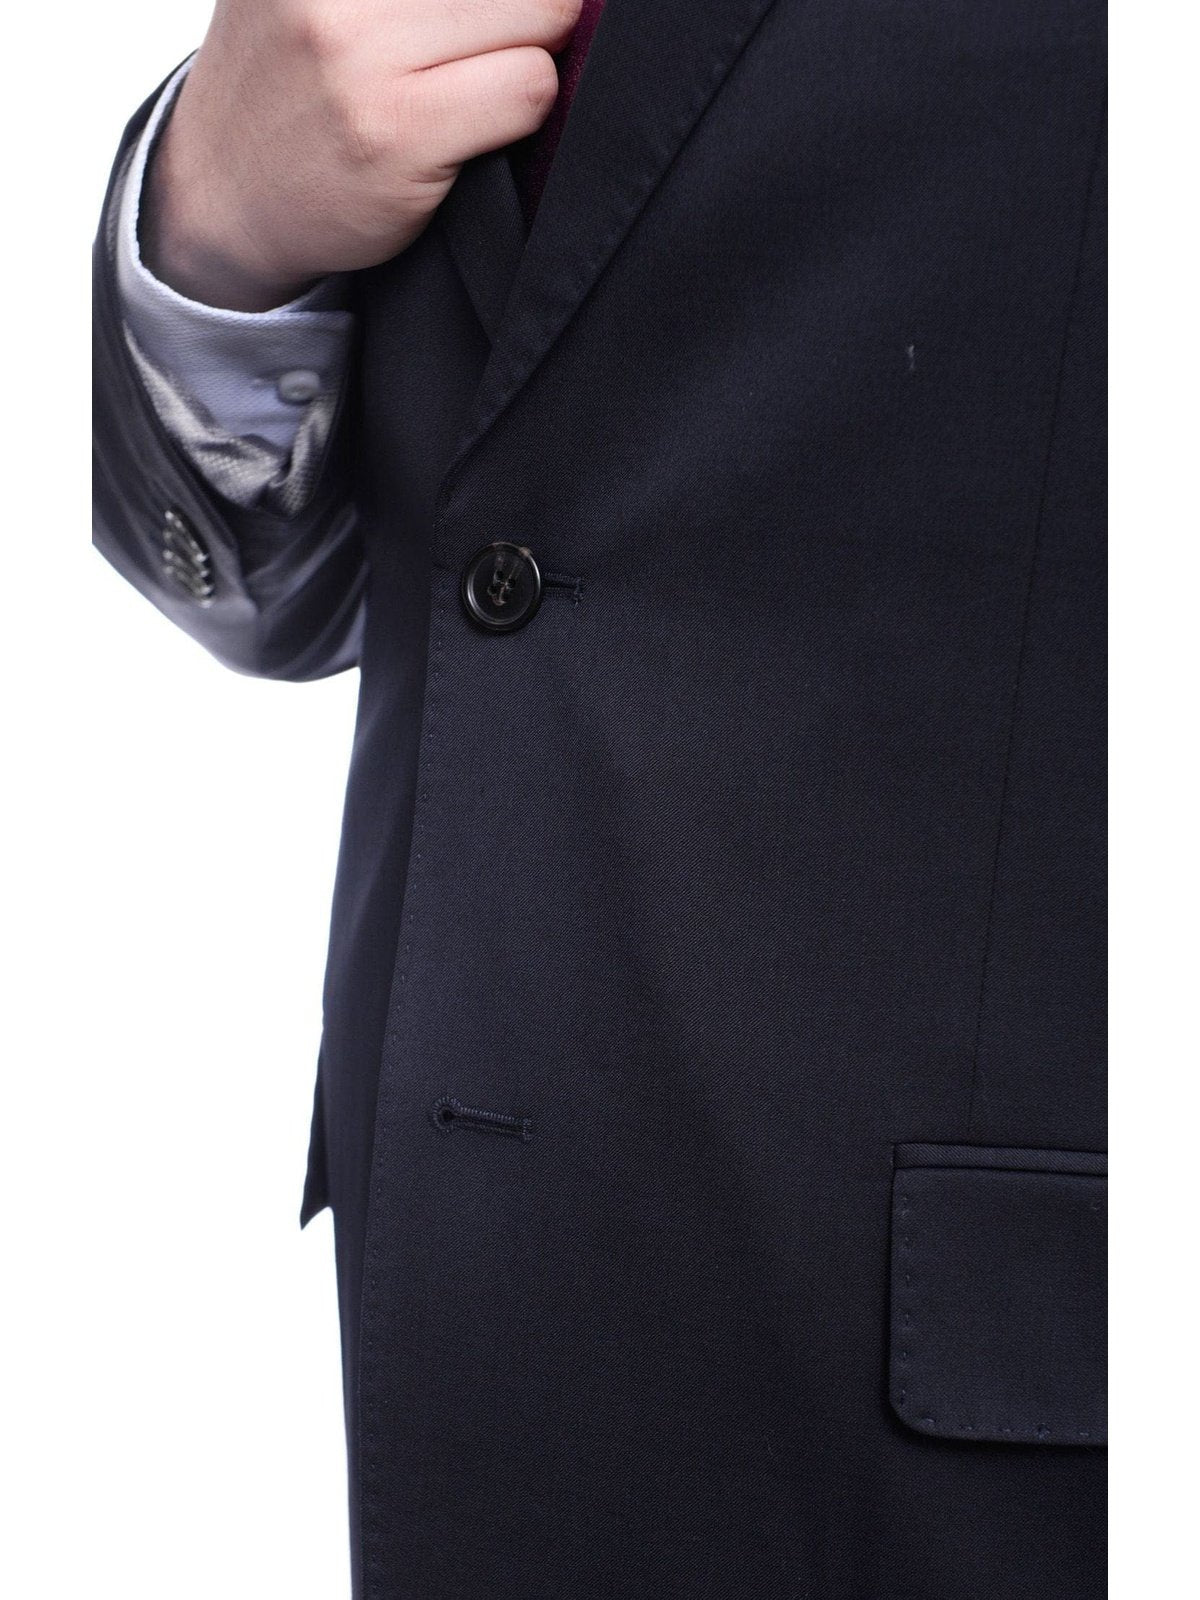 Portly Suits for Men - Executive Fit Sale | The Suit Depot